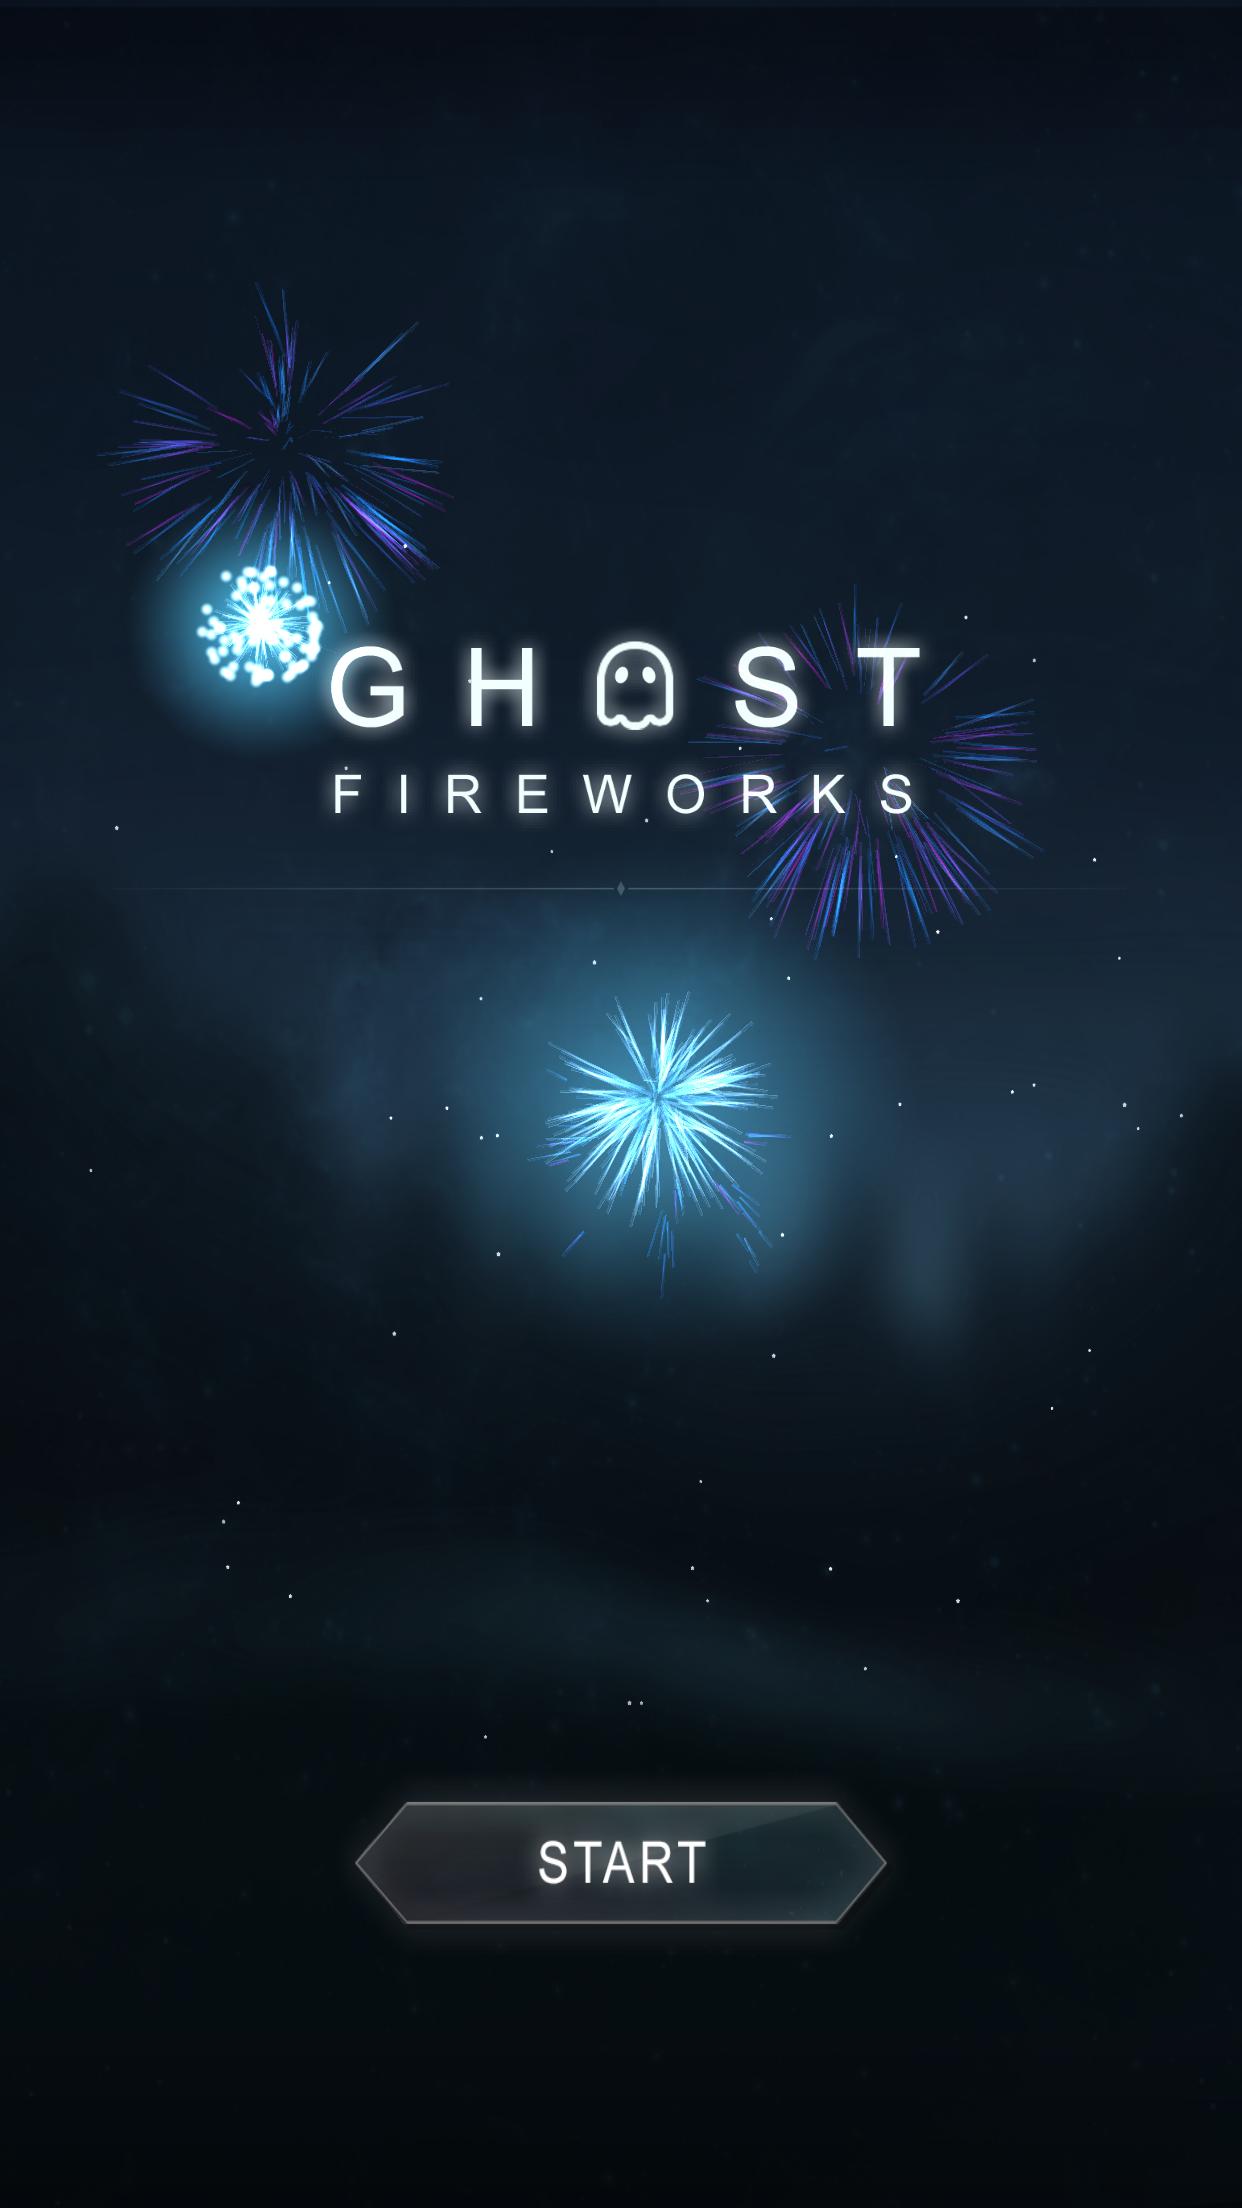 Android 用の Ghost Fireworks Apk をダウンロード